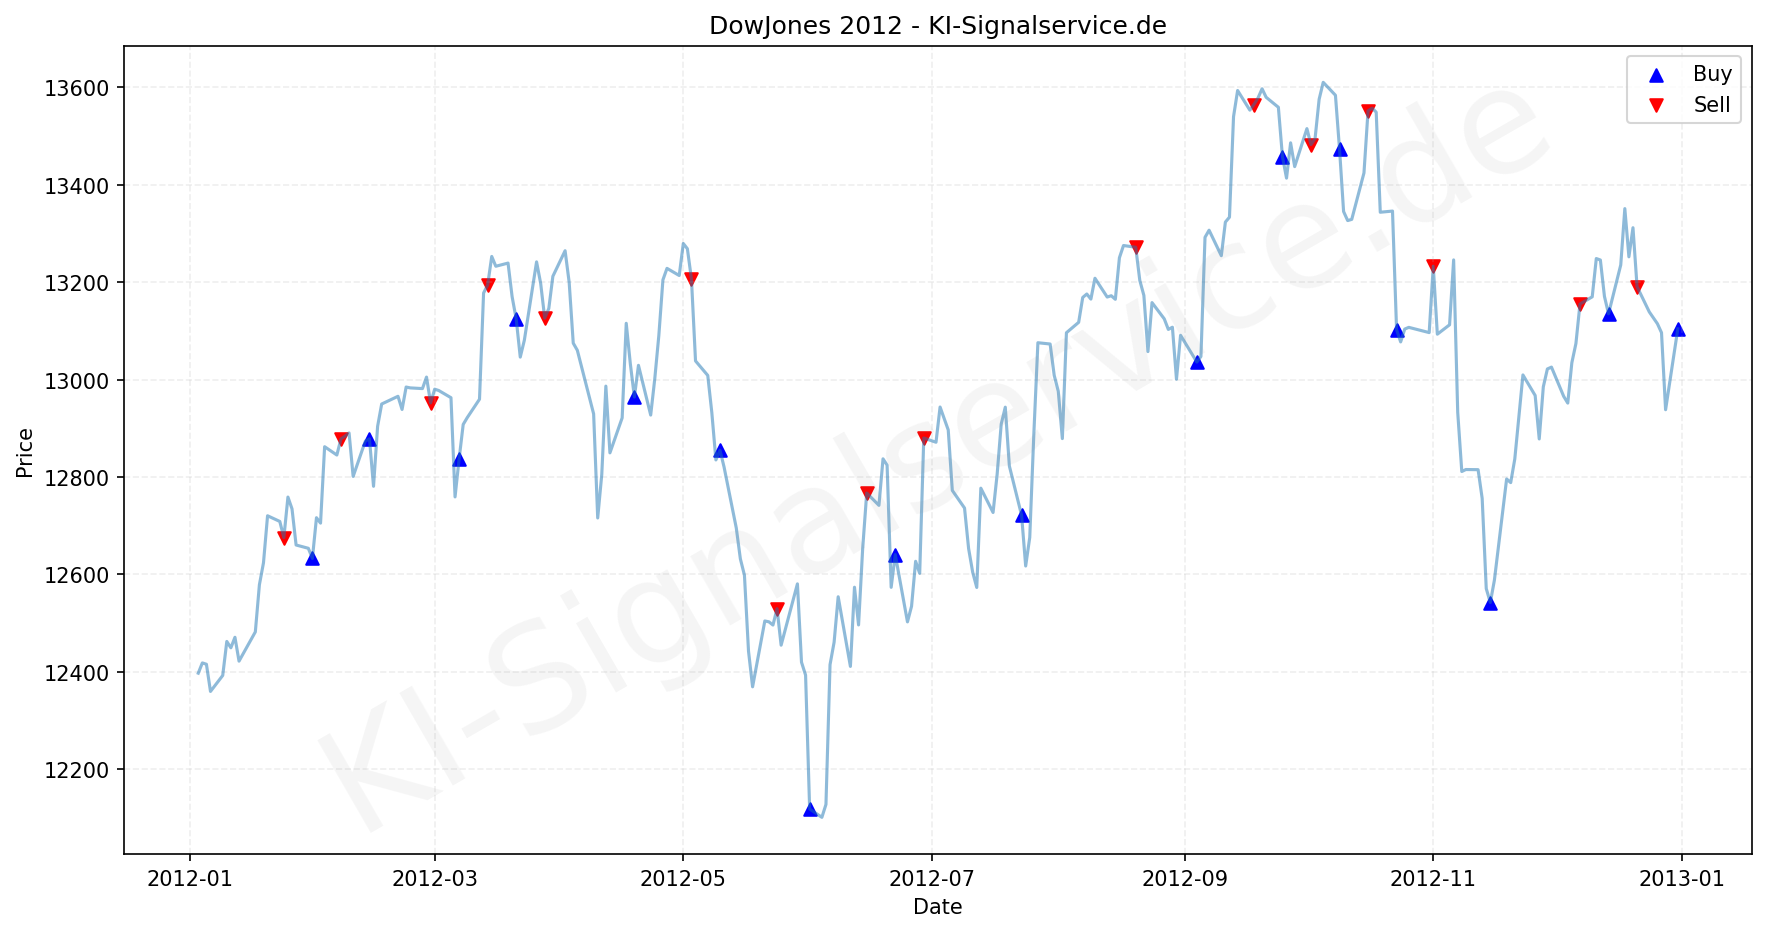 DOWJONES Index Performance Chart - KI Tradingsignale 2012